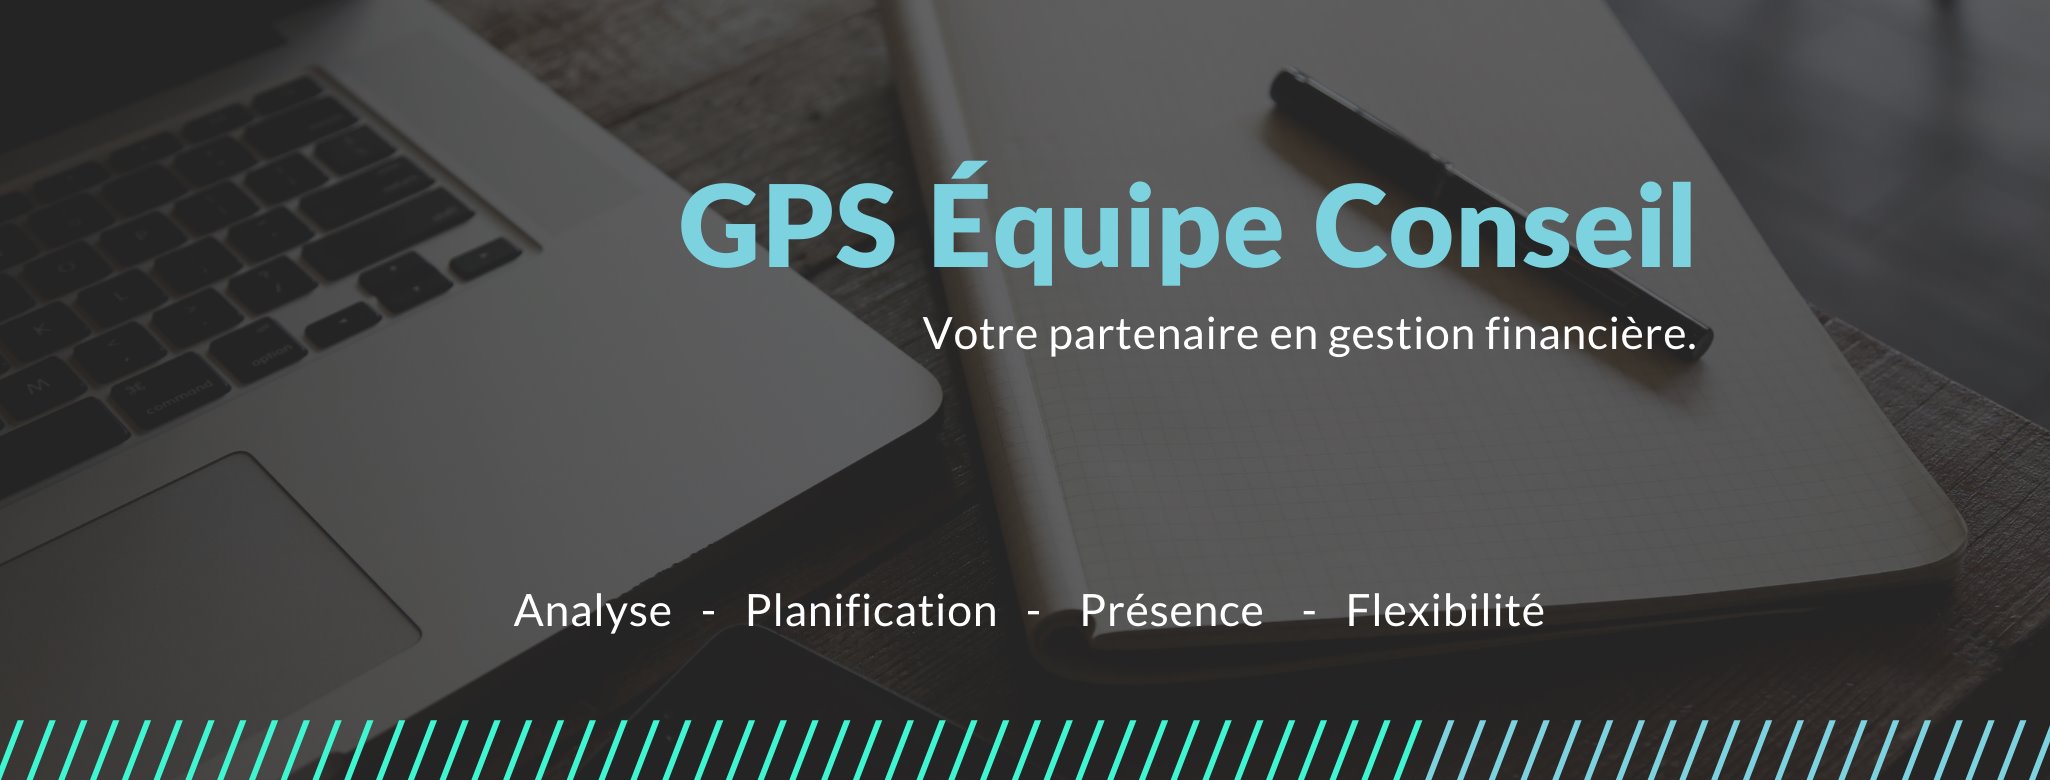 GPS Équipe Conseil - Conseiller Financier